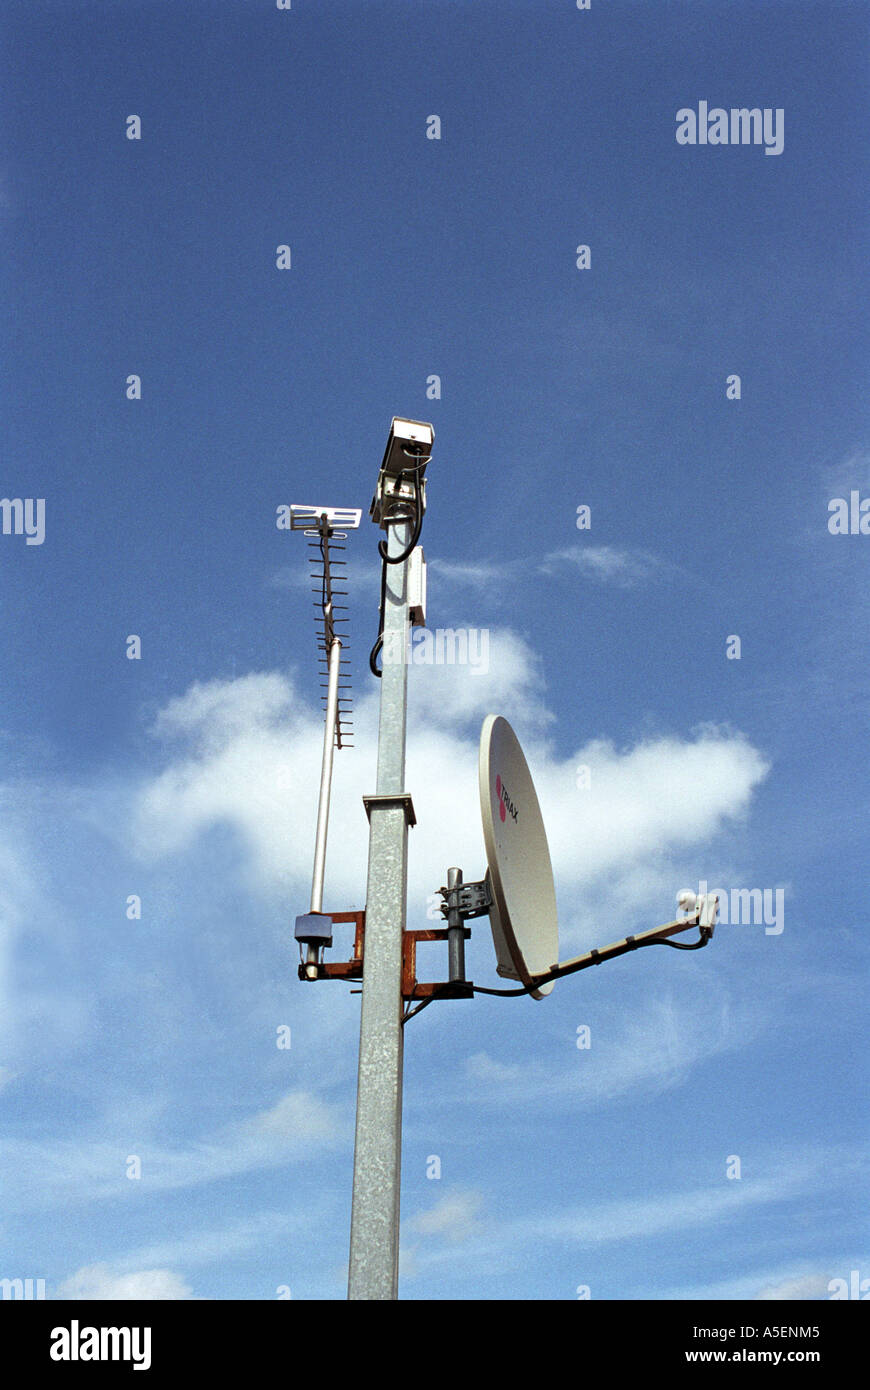 cctv and satellite dish Stock Photo - Alamy